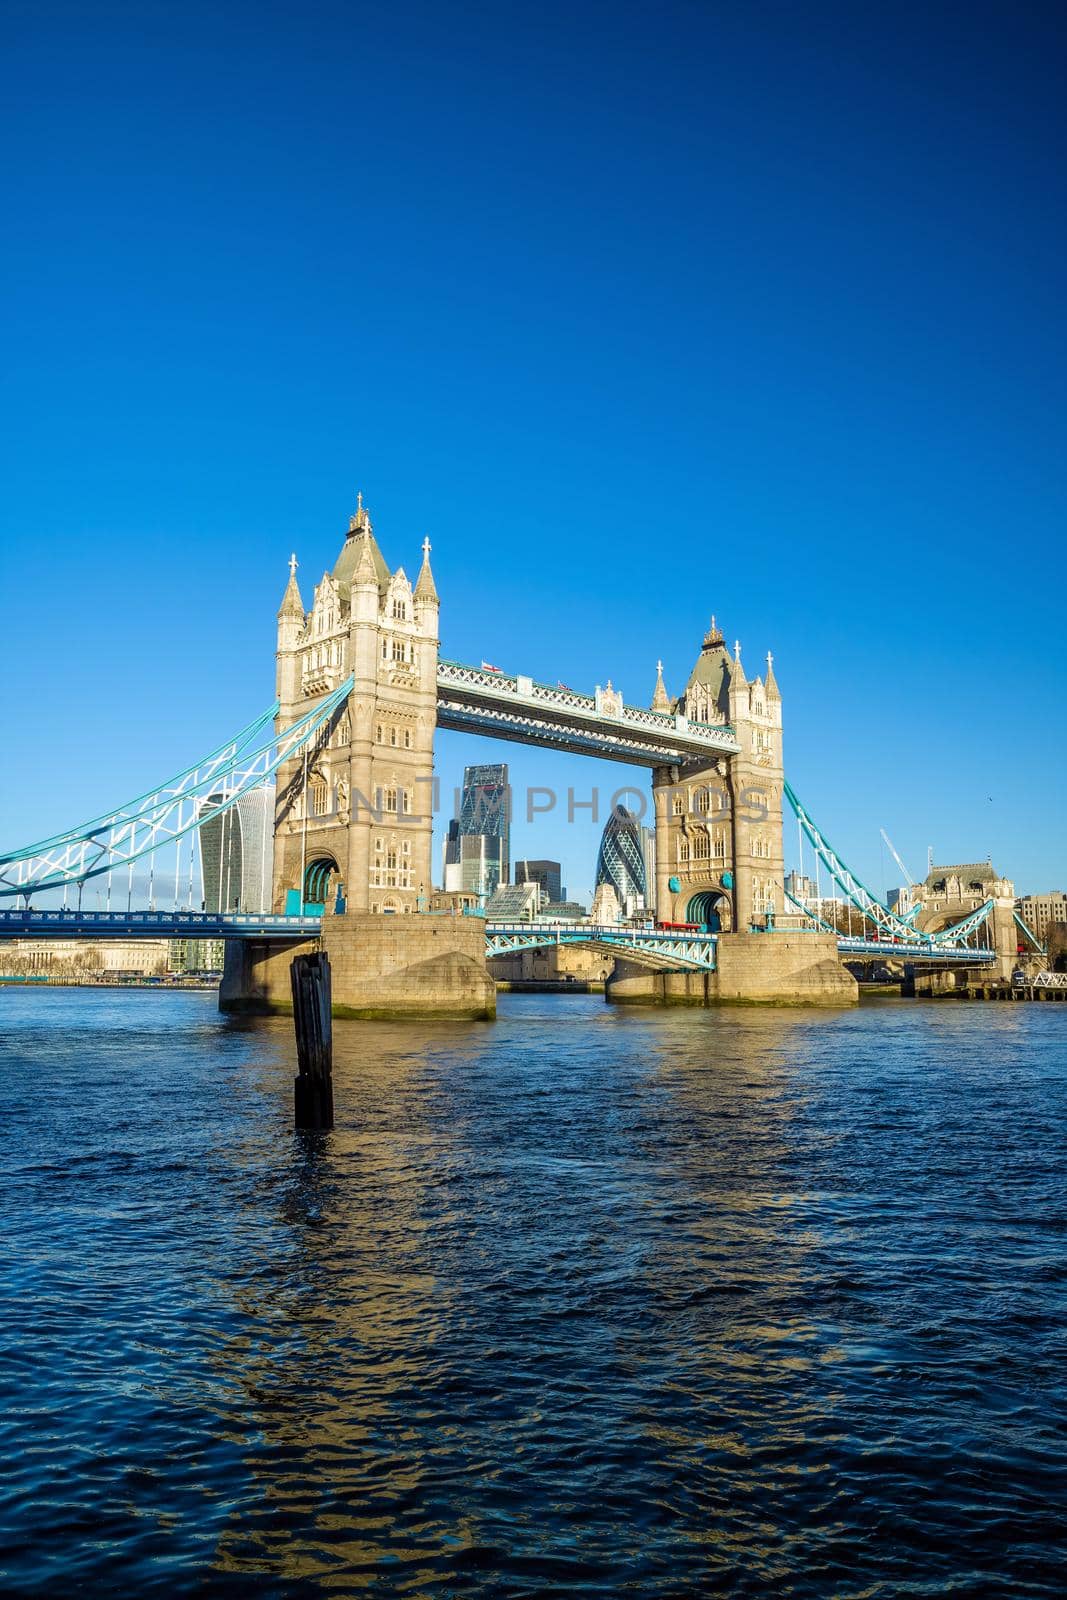 Tower Bridge in London, UK with blue sky